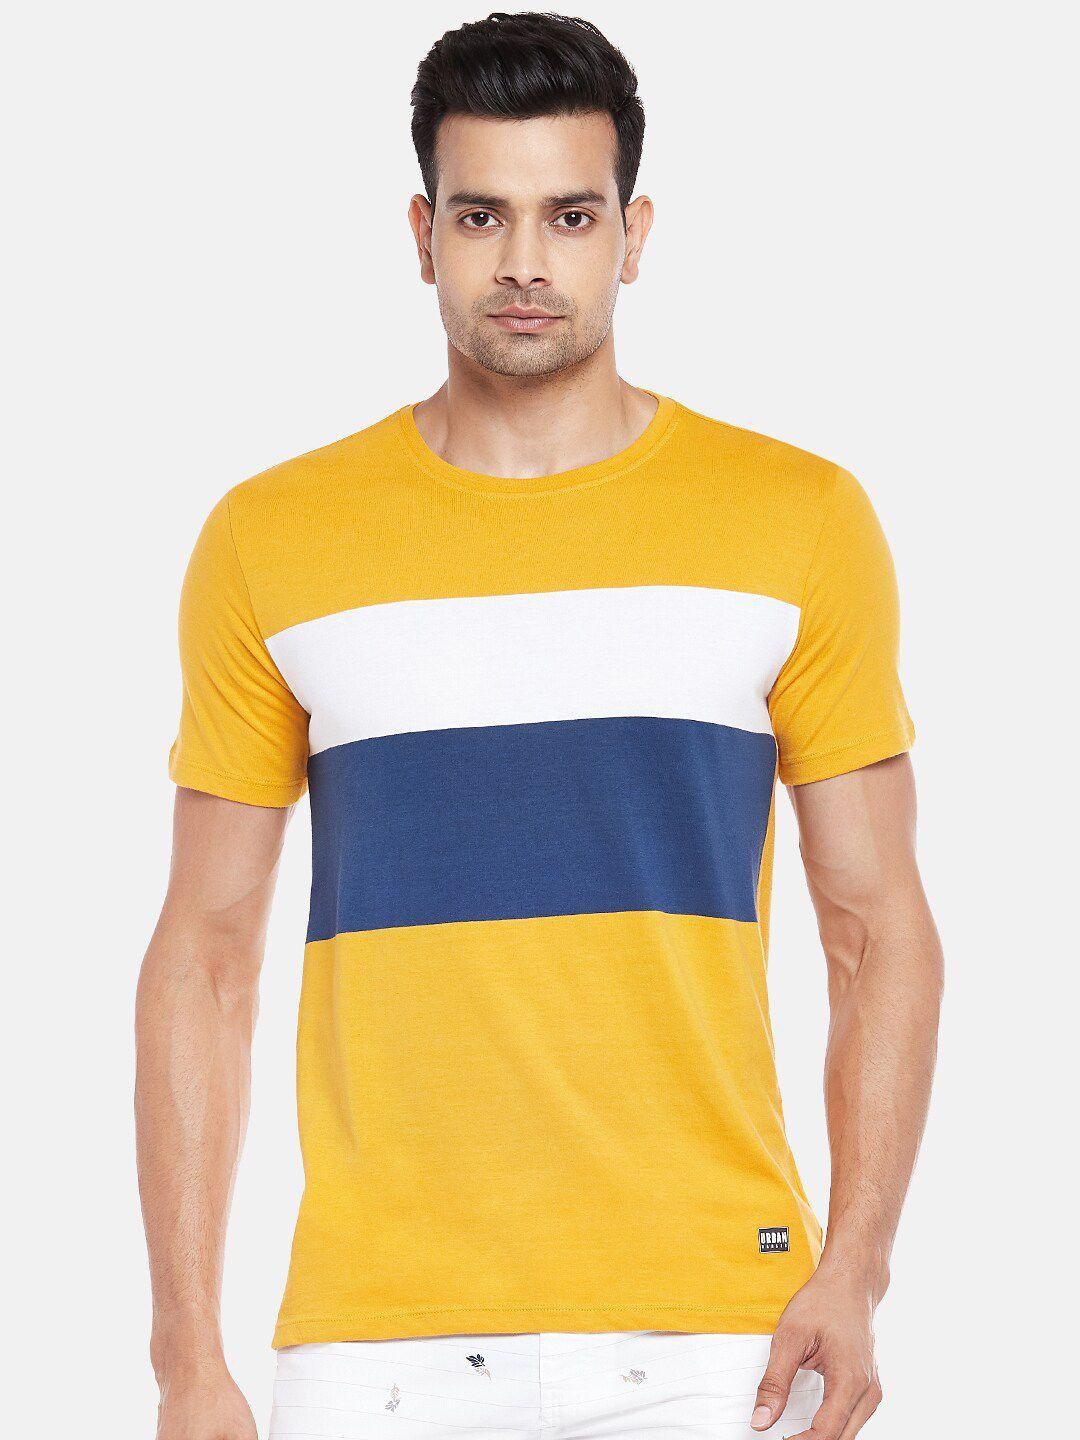 urban-ranger-by-pantaloons-men-mustard-yellow-&-blue-colourblocked-slim-fit-t-shirt